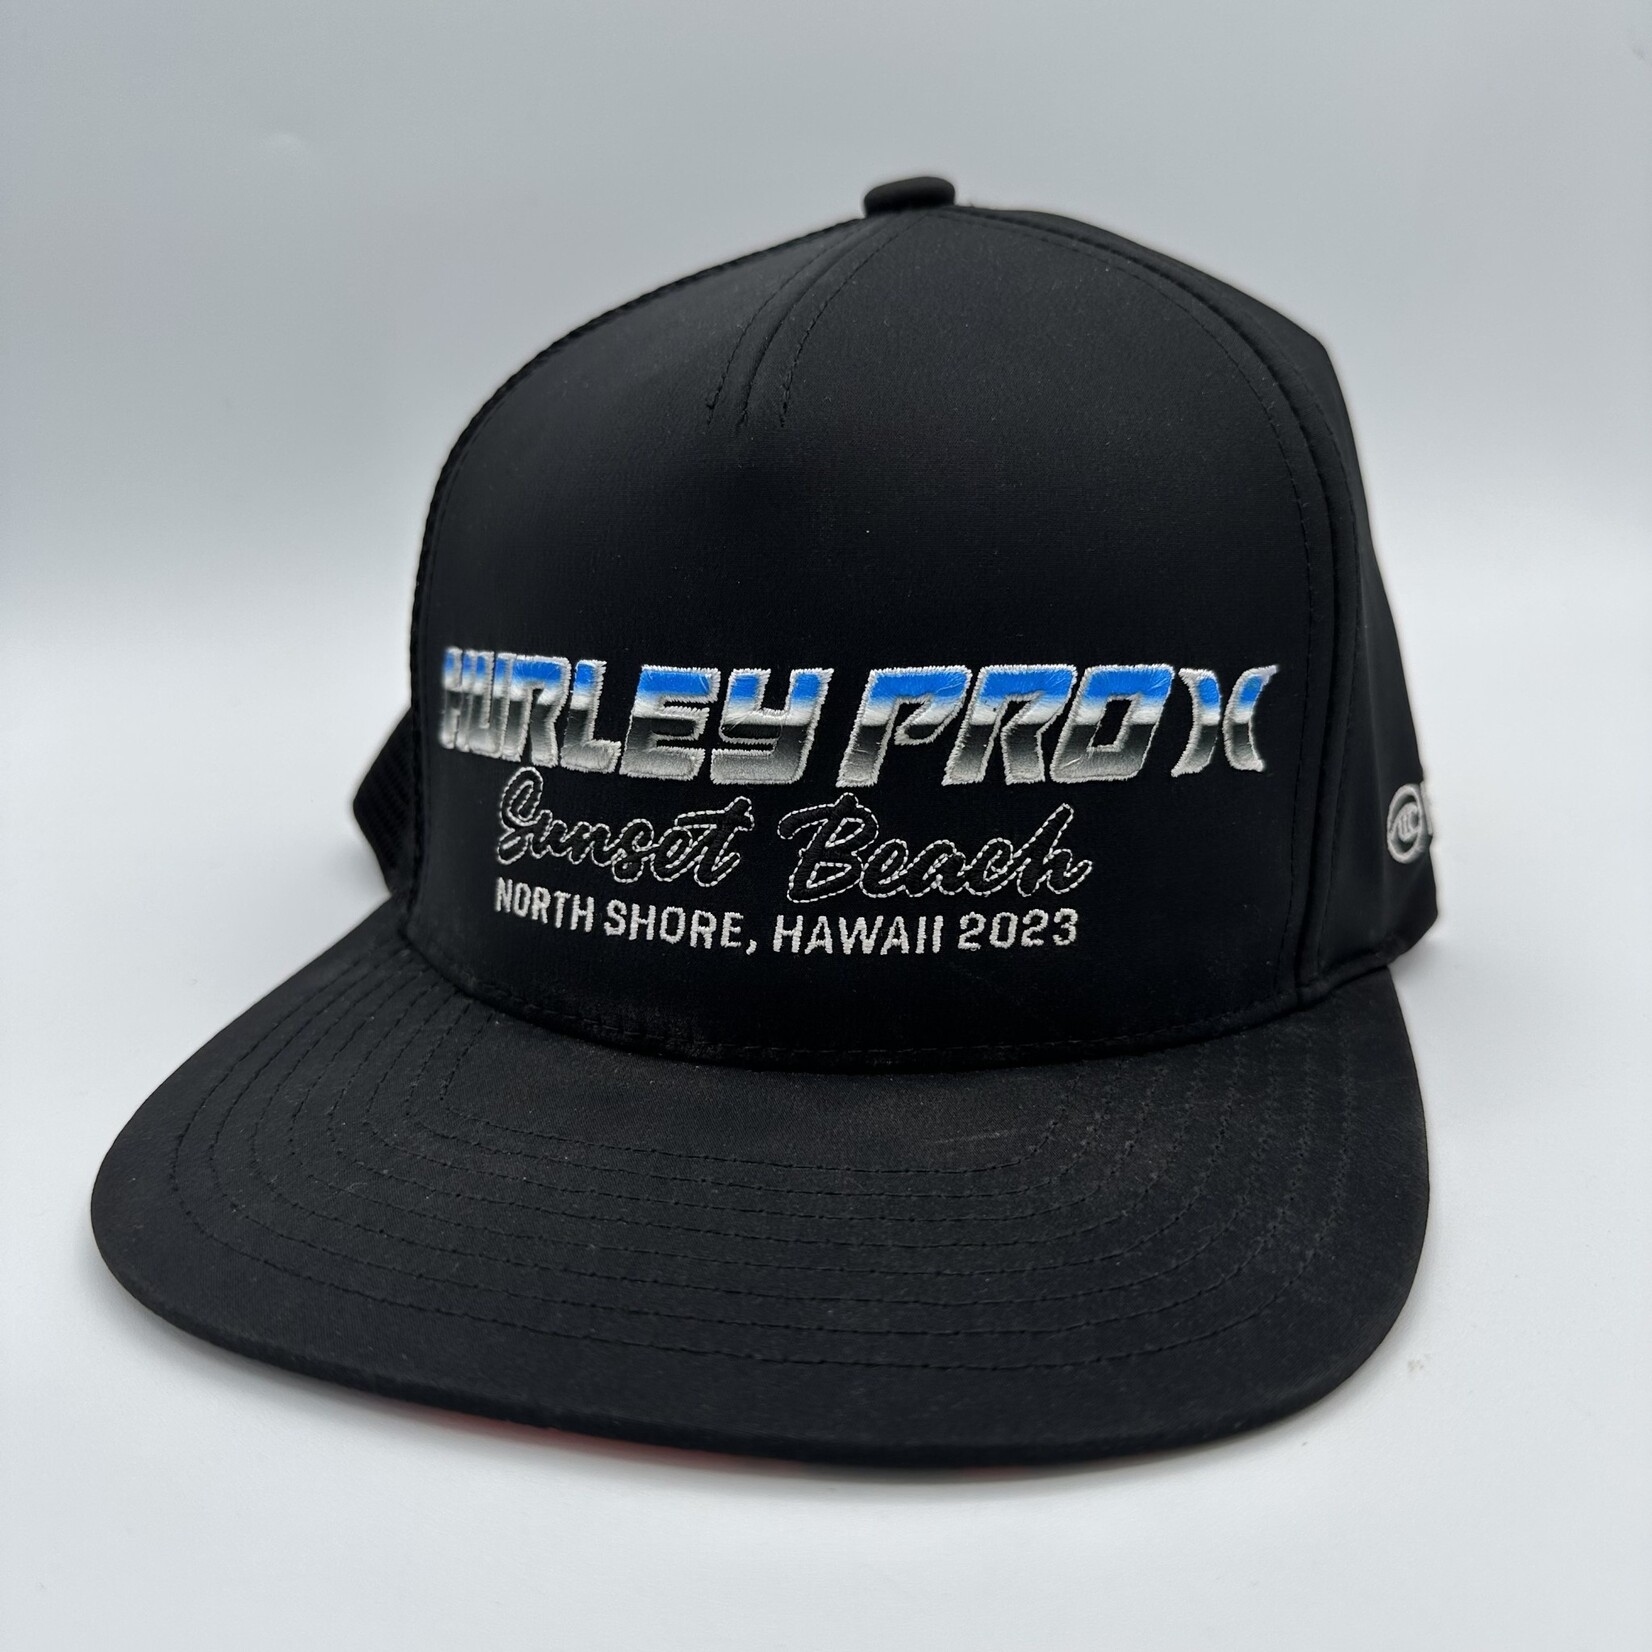 Mission Zero ReLoved Hurley Pro WSL 2023 hat